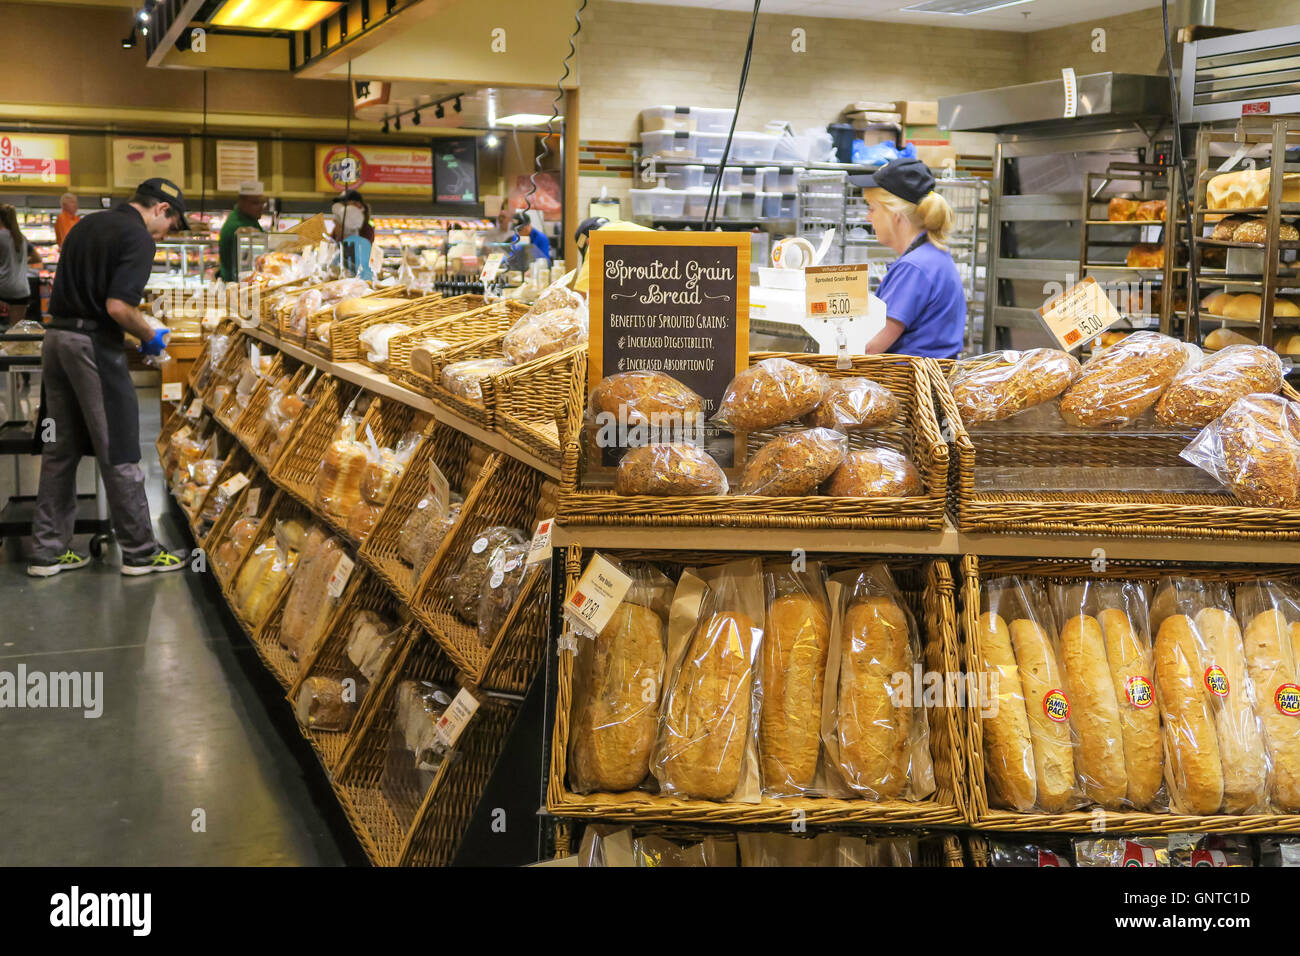 bakery-section-at-wegmans-grocery-store-westwood-massachusetts-usa-GNTC1D.jpg